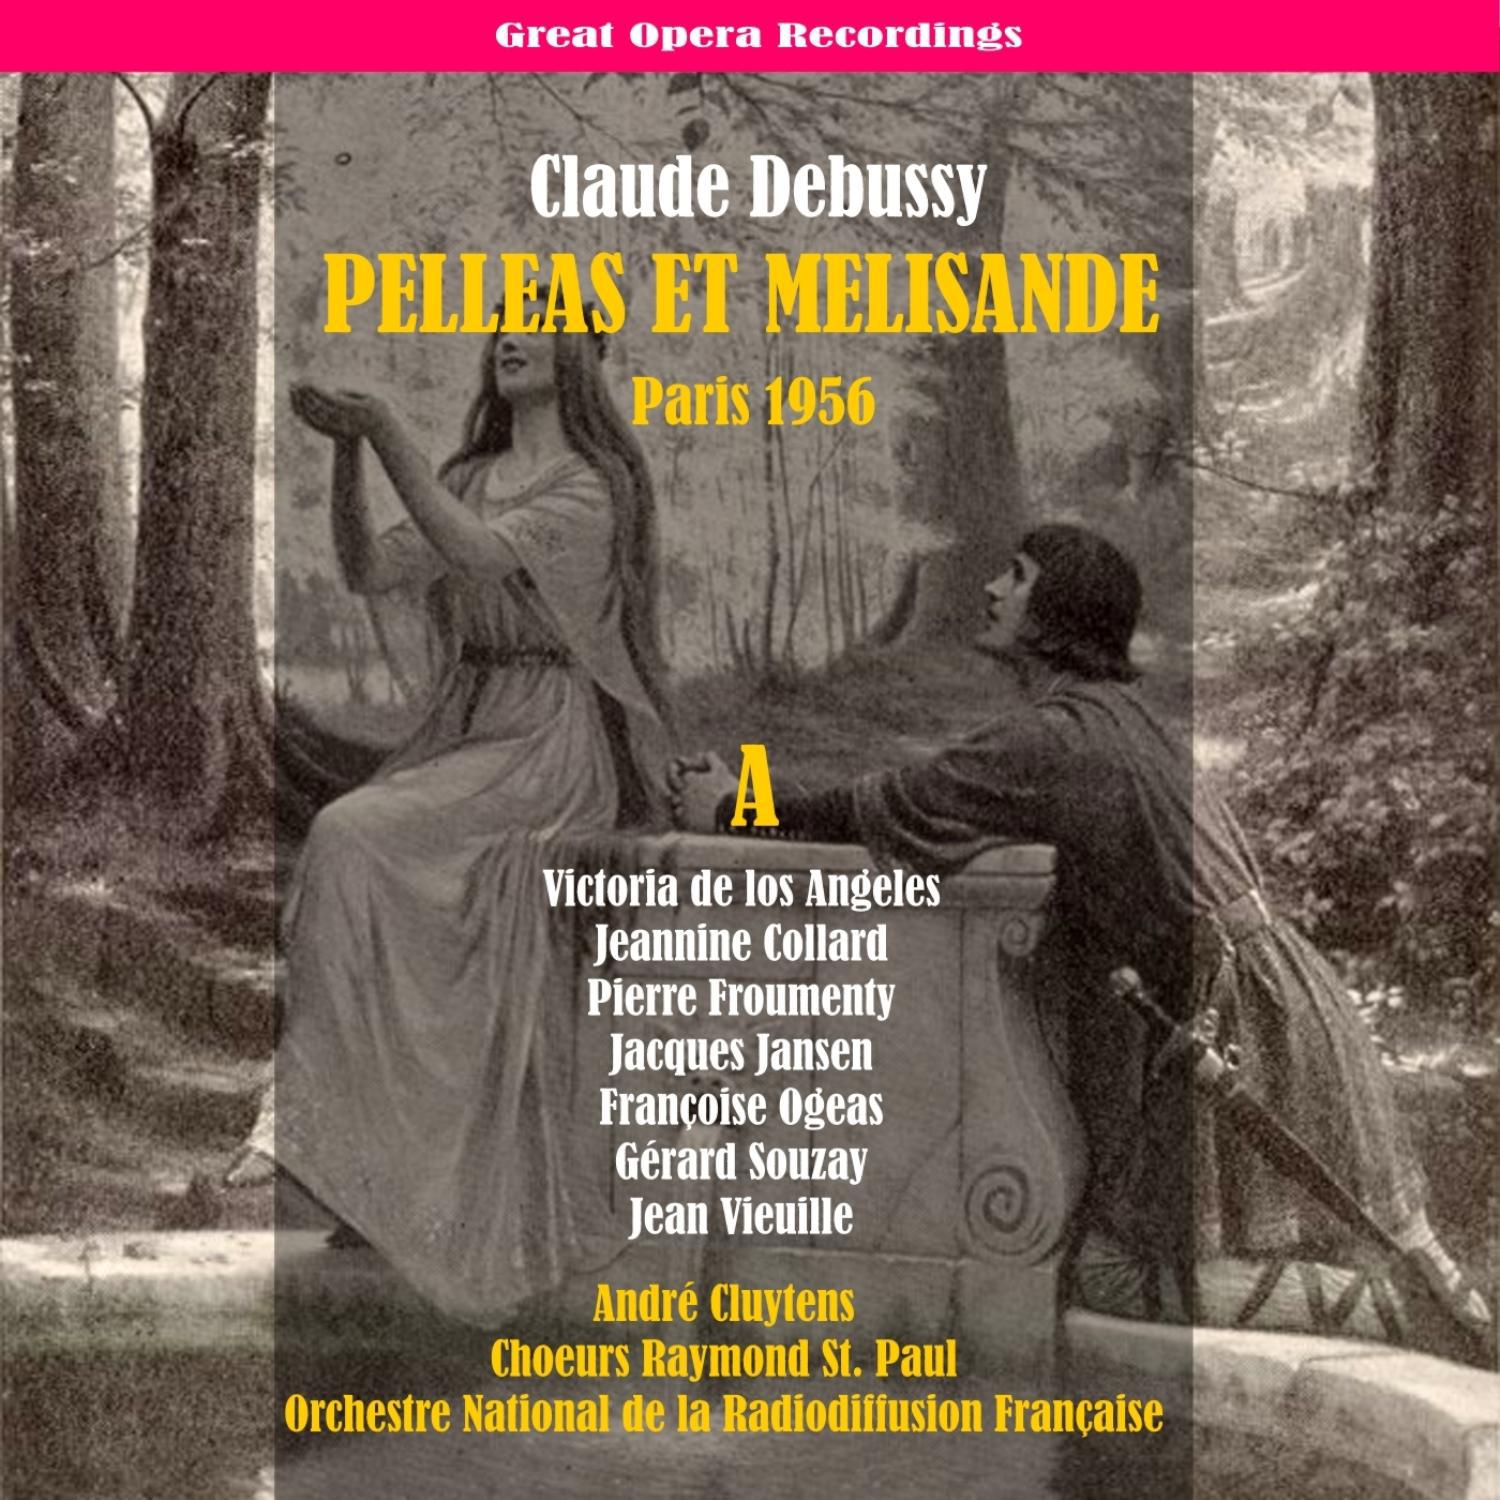 Choeurs Raymond St. Paul - Pelléas et Mélisande